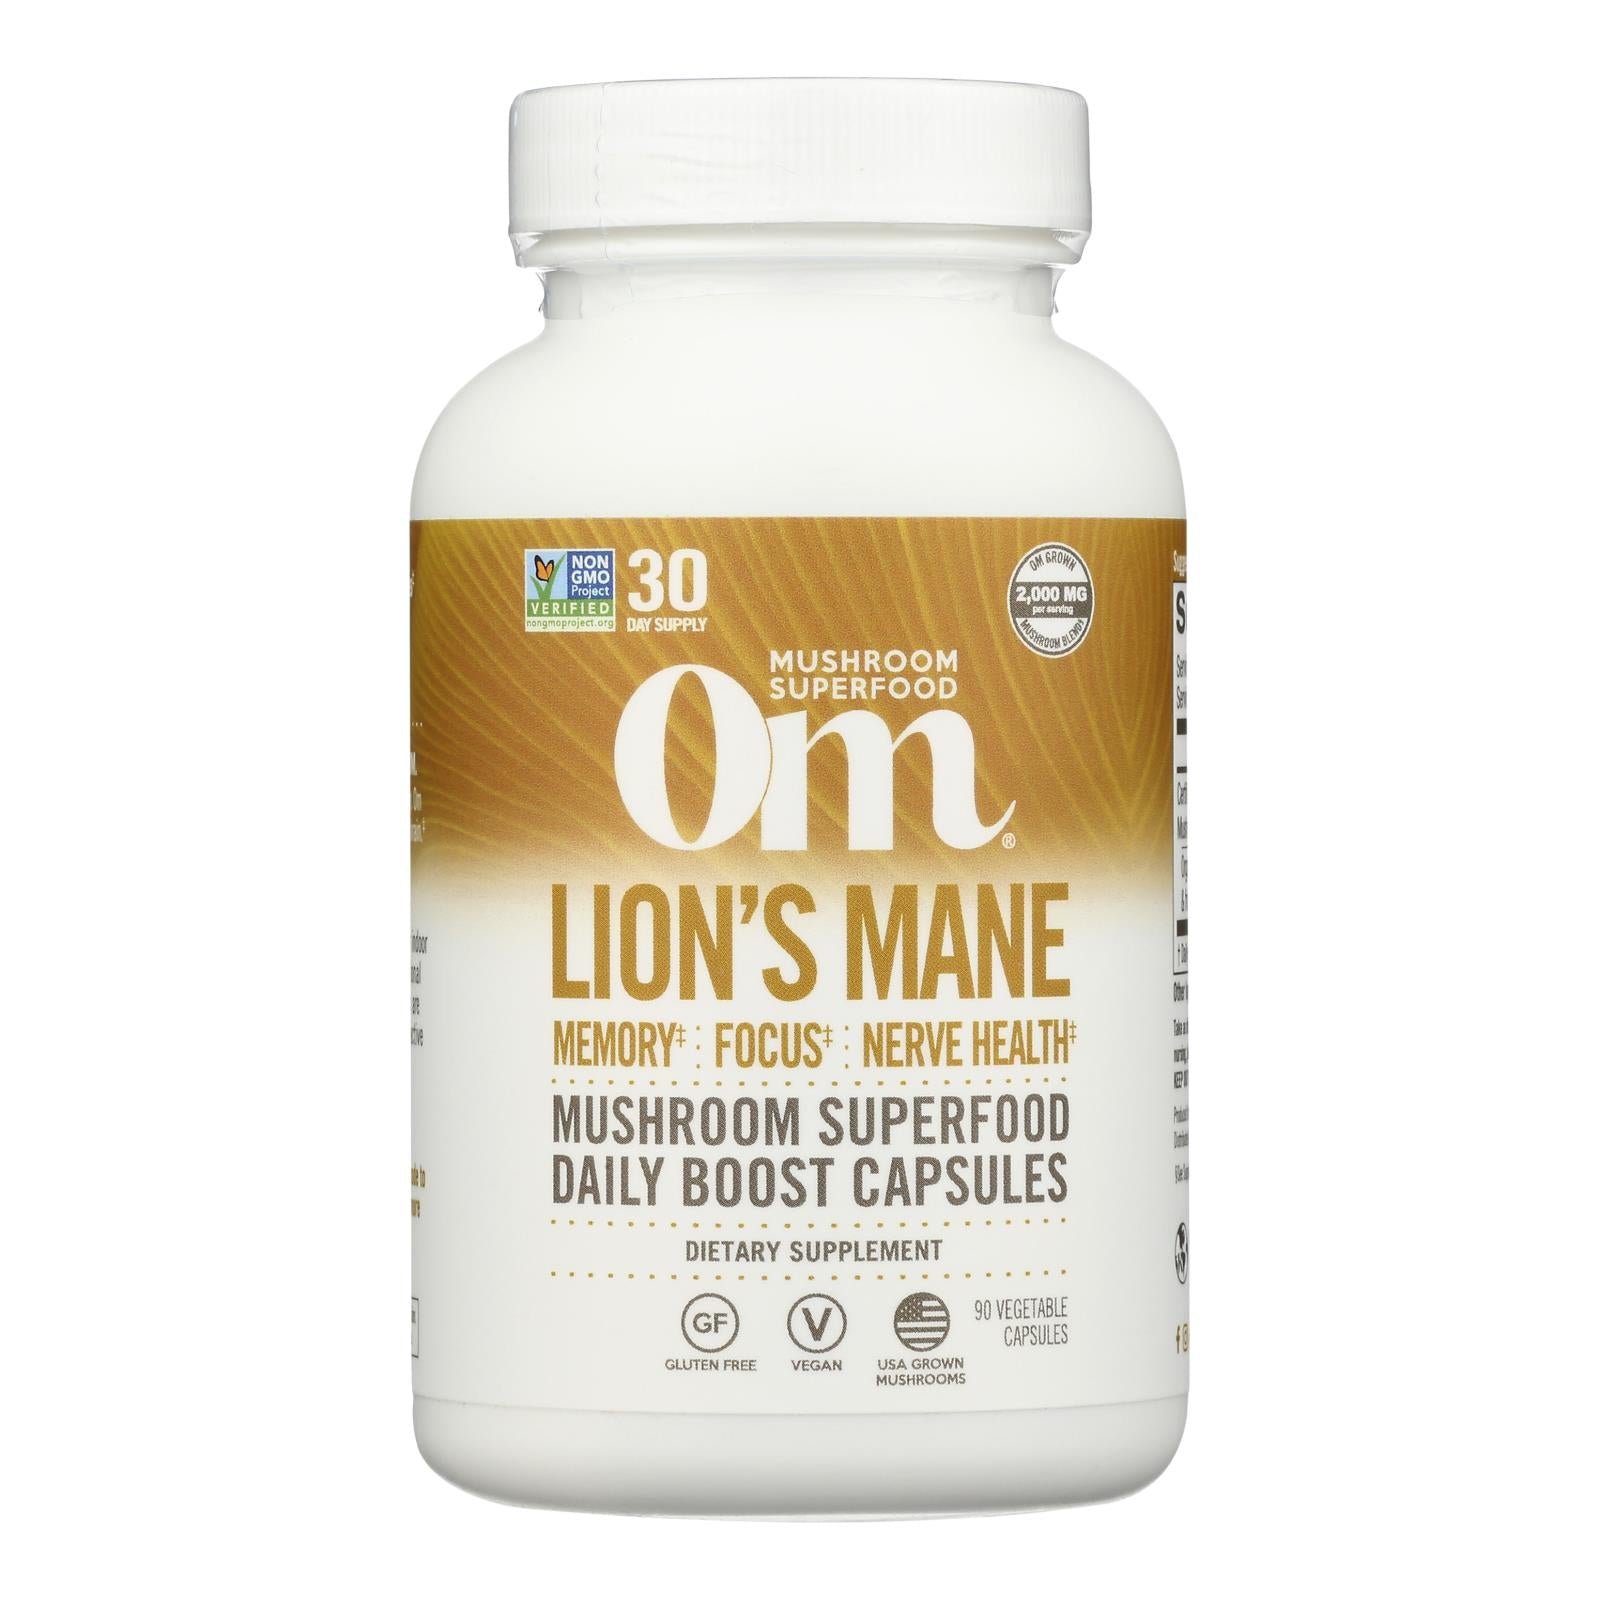 Organic Mushroom Nutrition - Mush Sprfd Lions Mane Cap - 1 Each - 90 Ct